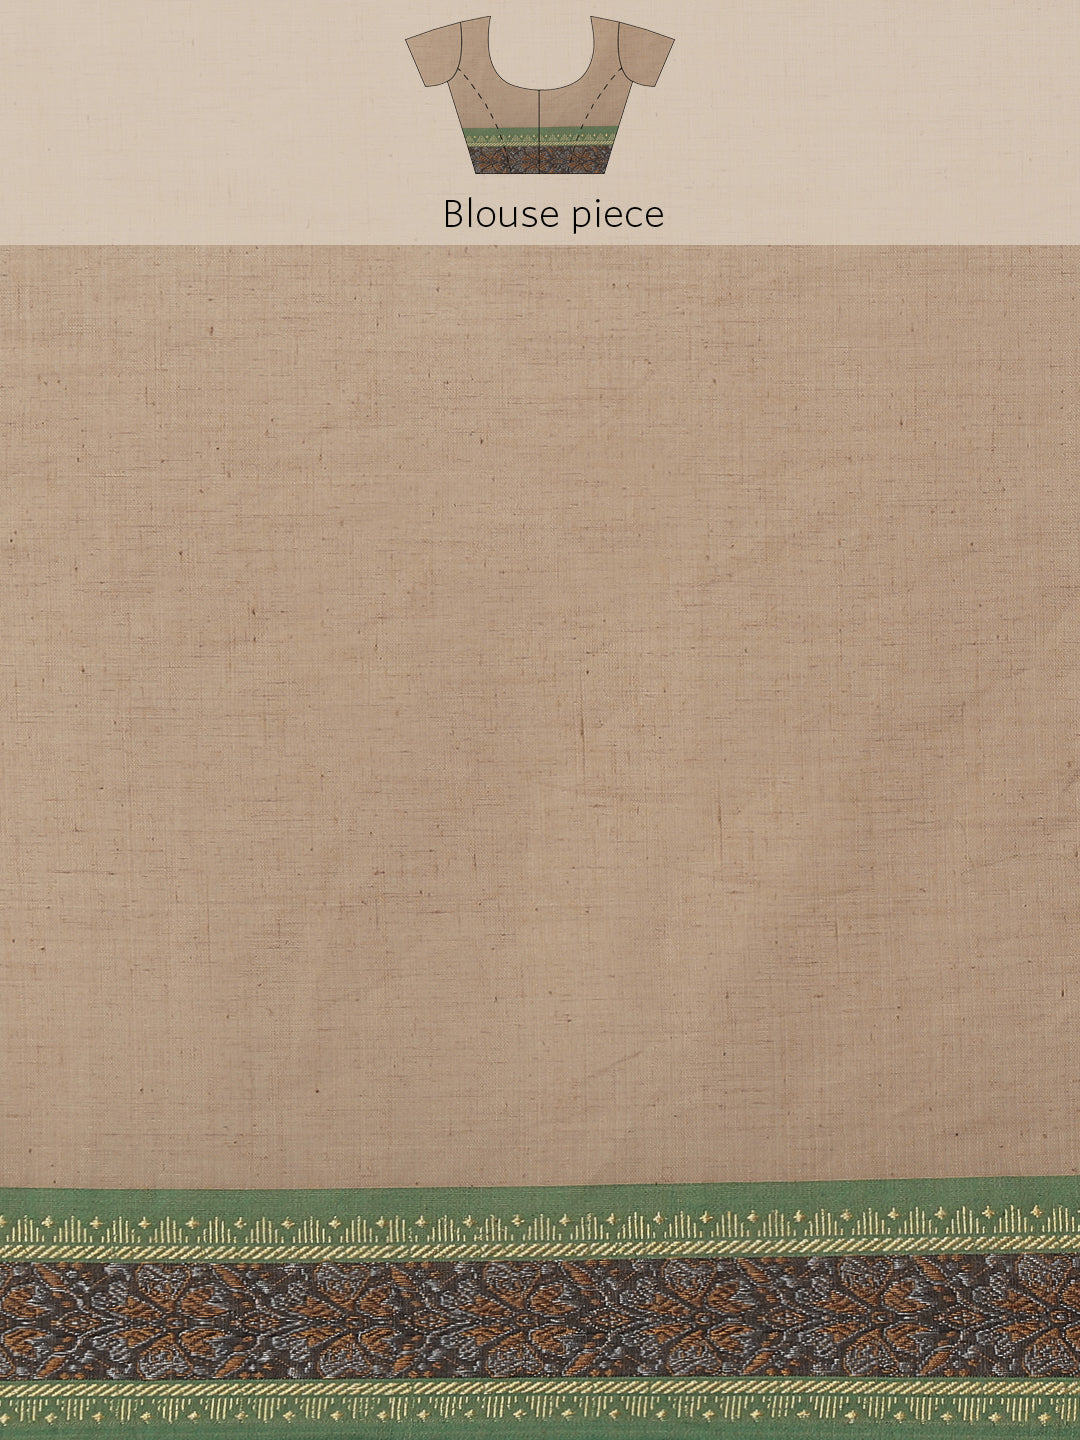 Ishin Women's Cotton Blend Beige Solid Woven Design Saree With Blouse Piece